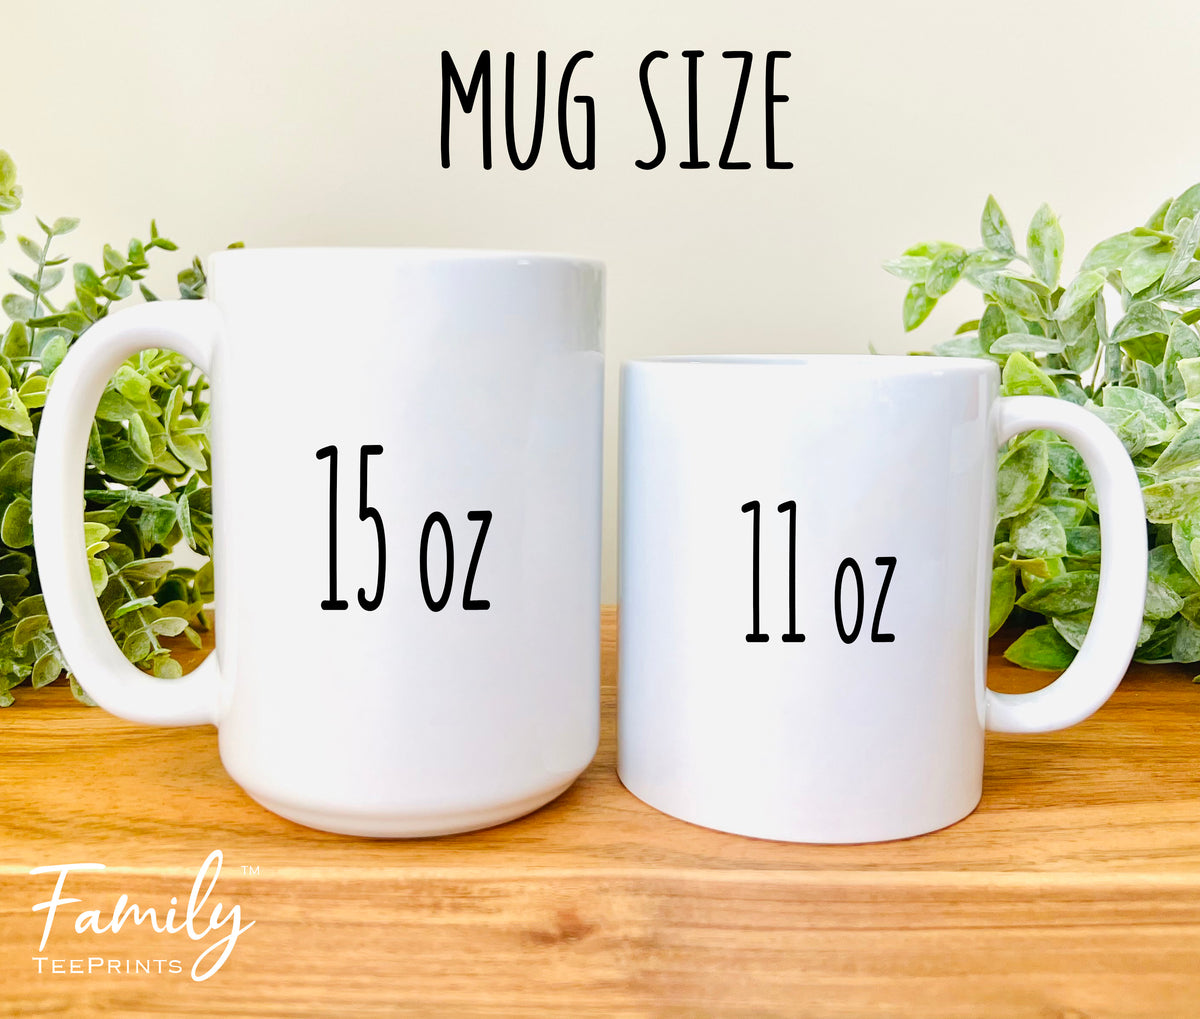 Other Accountants Me - Coffee Mug - Gifts For Accountant - Accountant Coffee Mug - familyteeprints